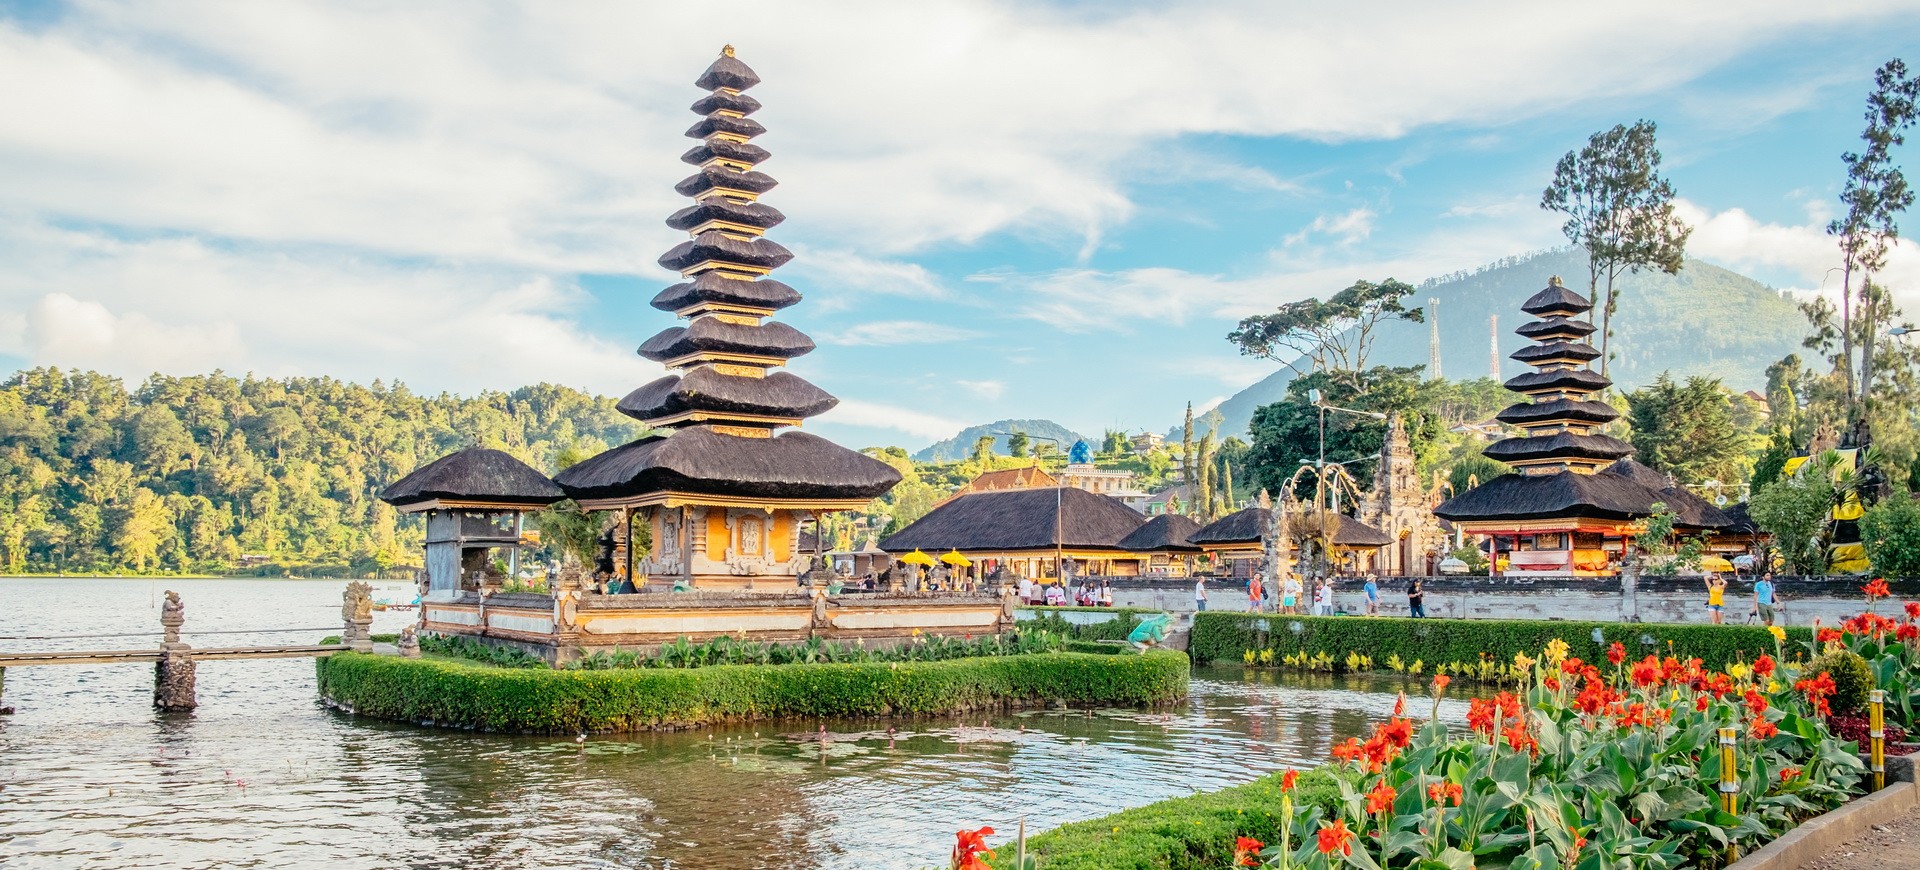 Indonésie Bali Lac Bratan temple Hindou Pura Ulun Danu Bratan